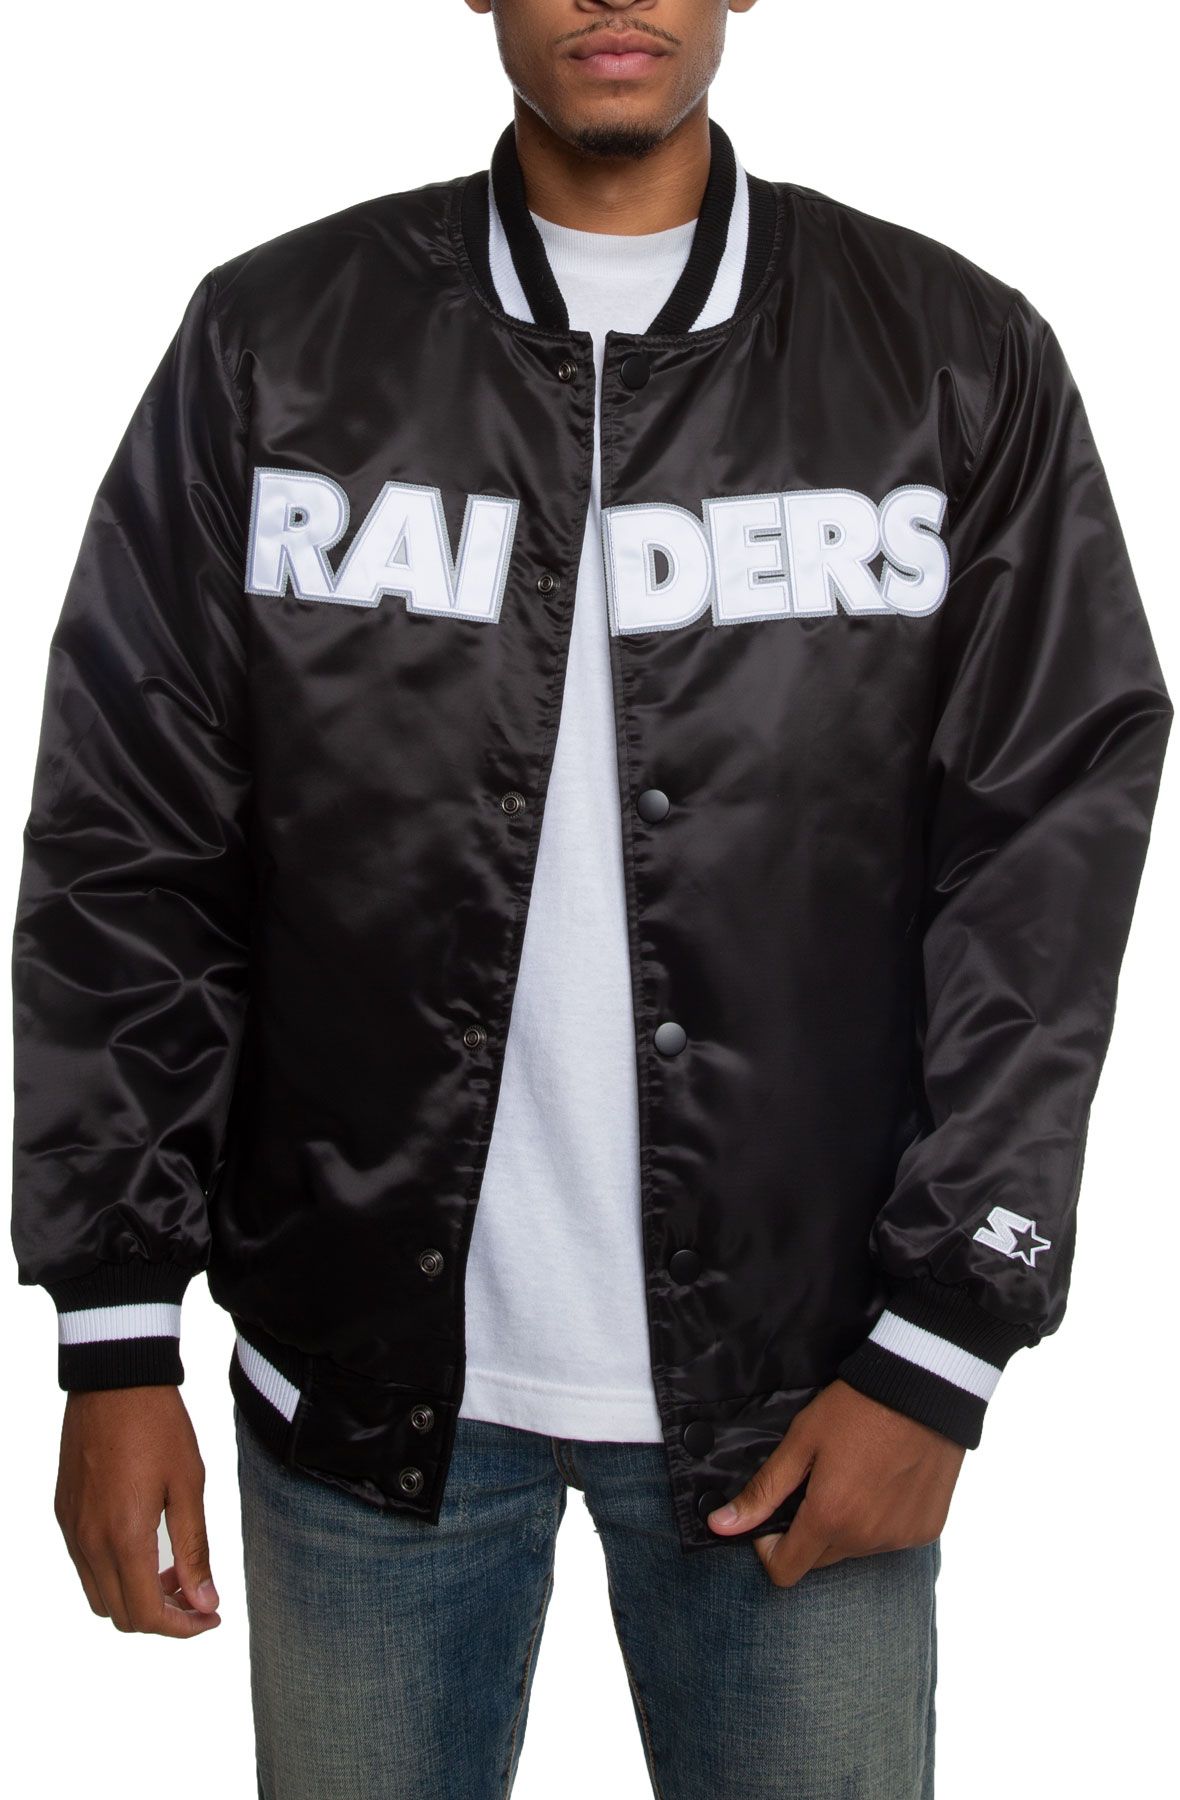 Starter Bomber Silver/Black Los Angeles Raiders Jacket - Jacket Makers